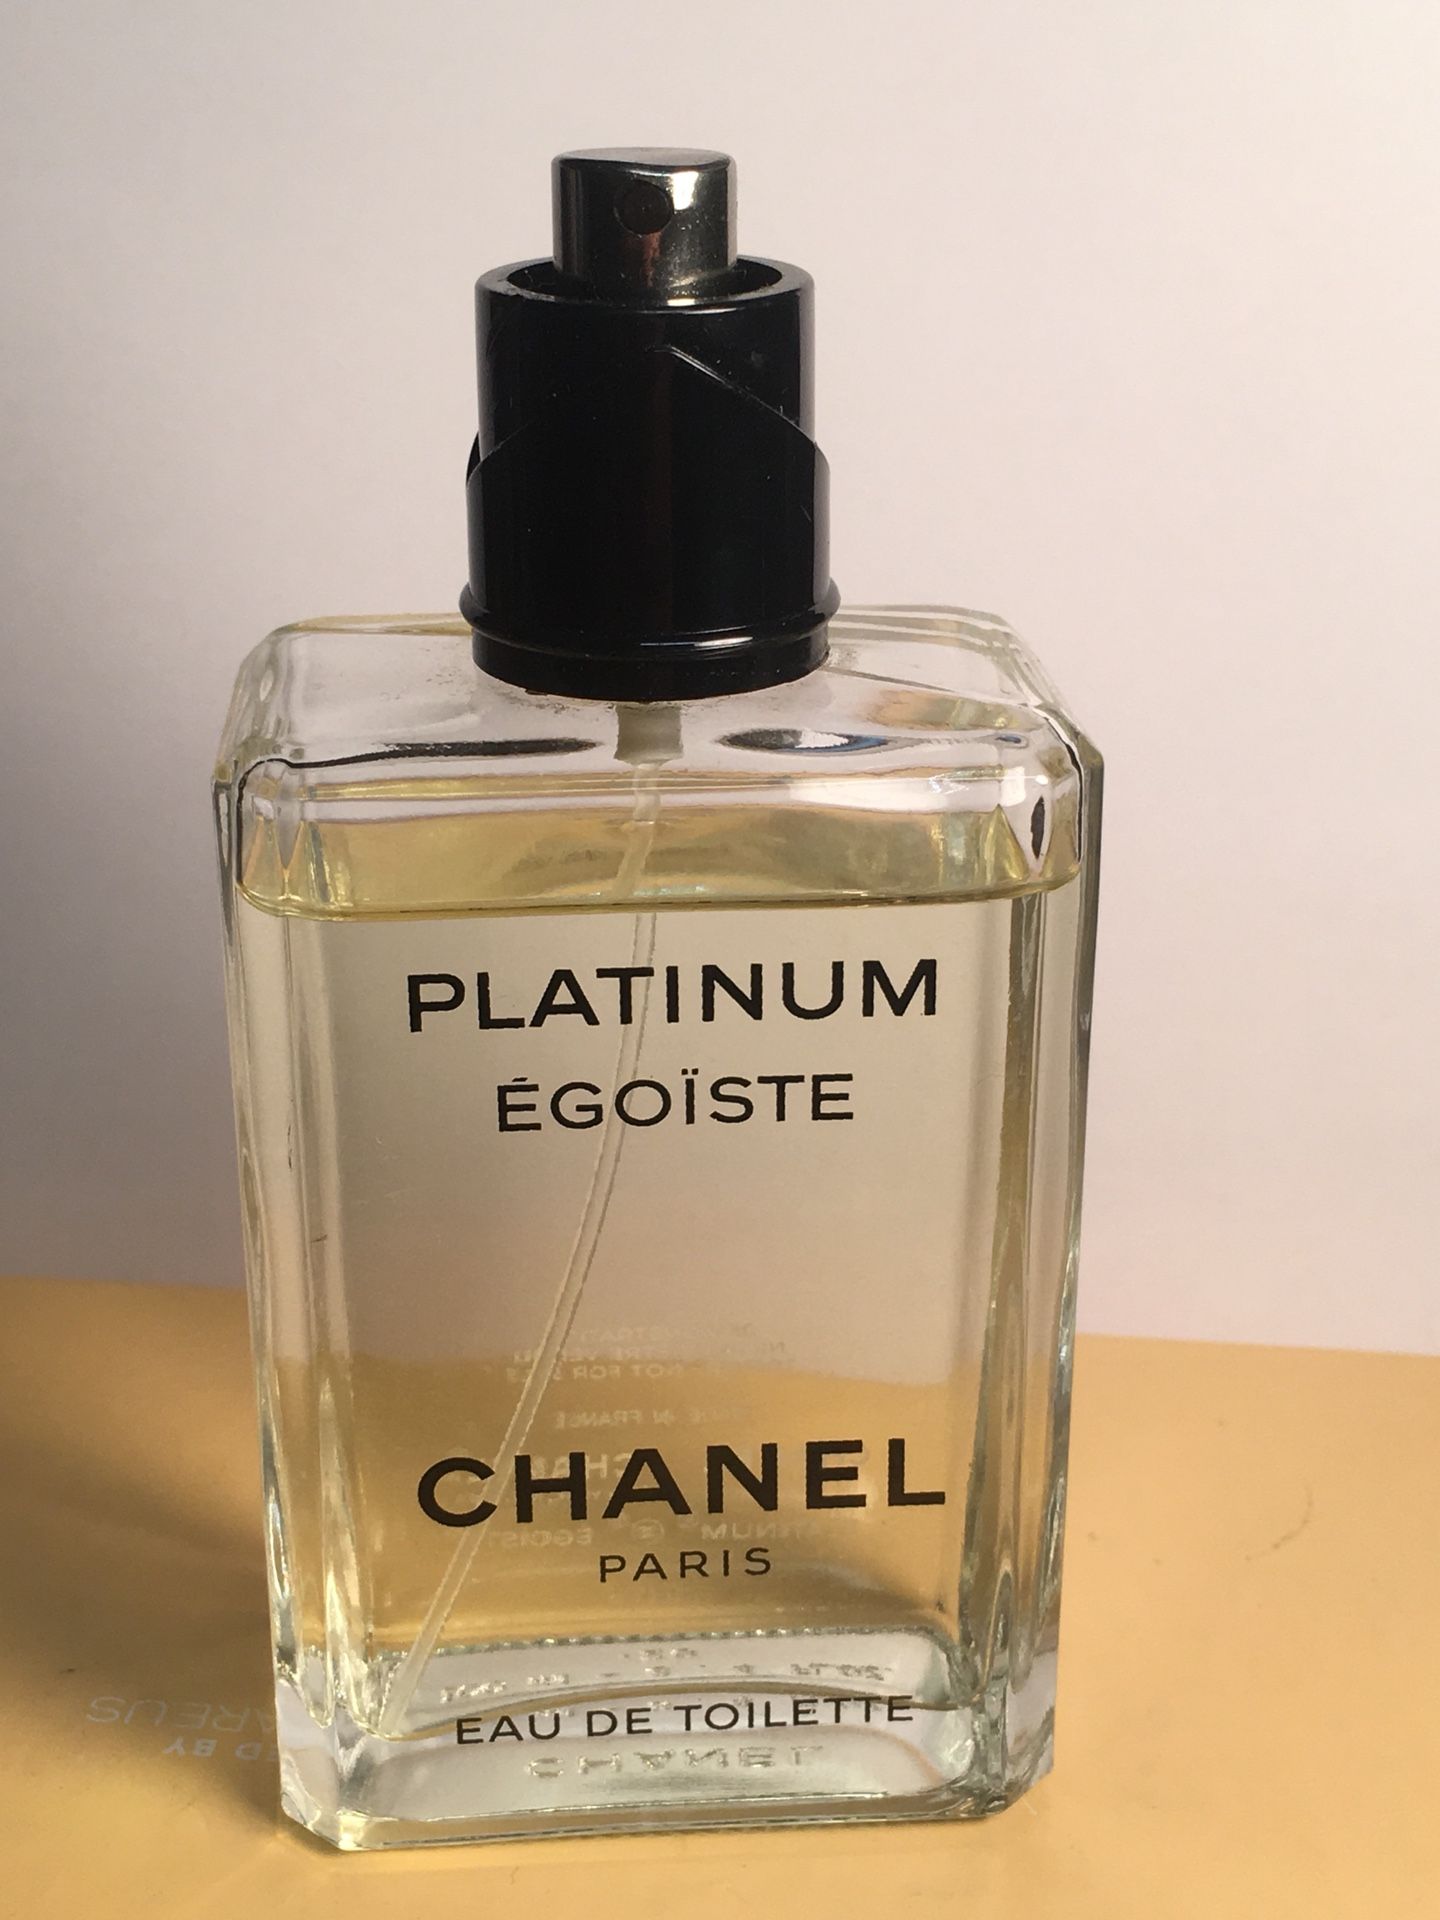 Chanel platinum Egoiste 100ml 3.4 oz